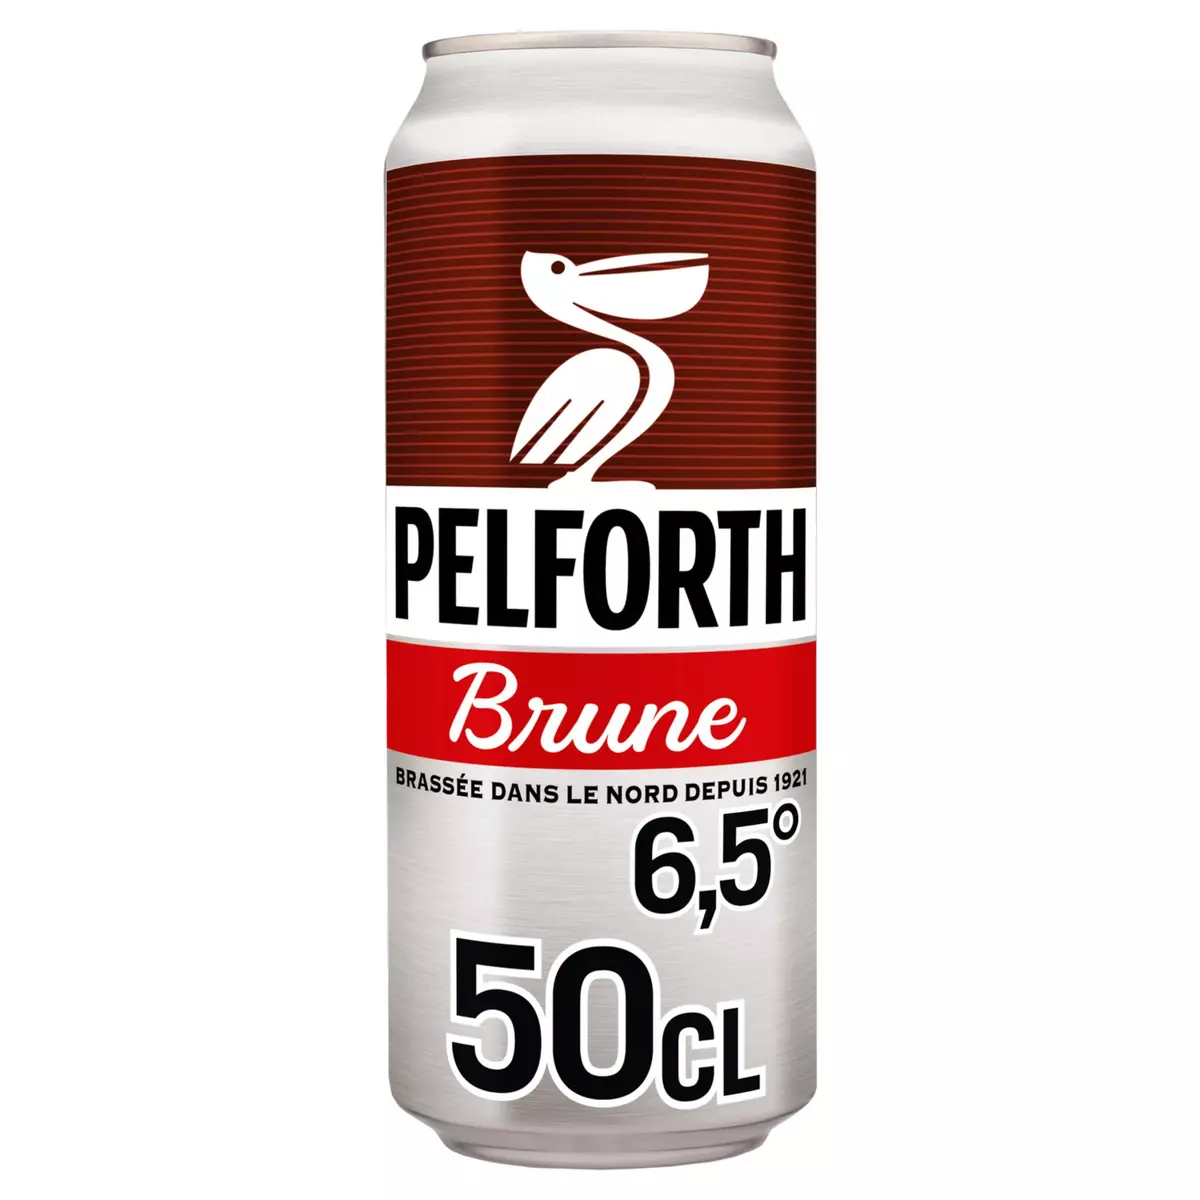 PELFORTH Bière brune du Nord 6,5% 50cl